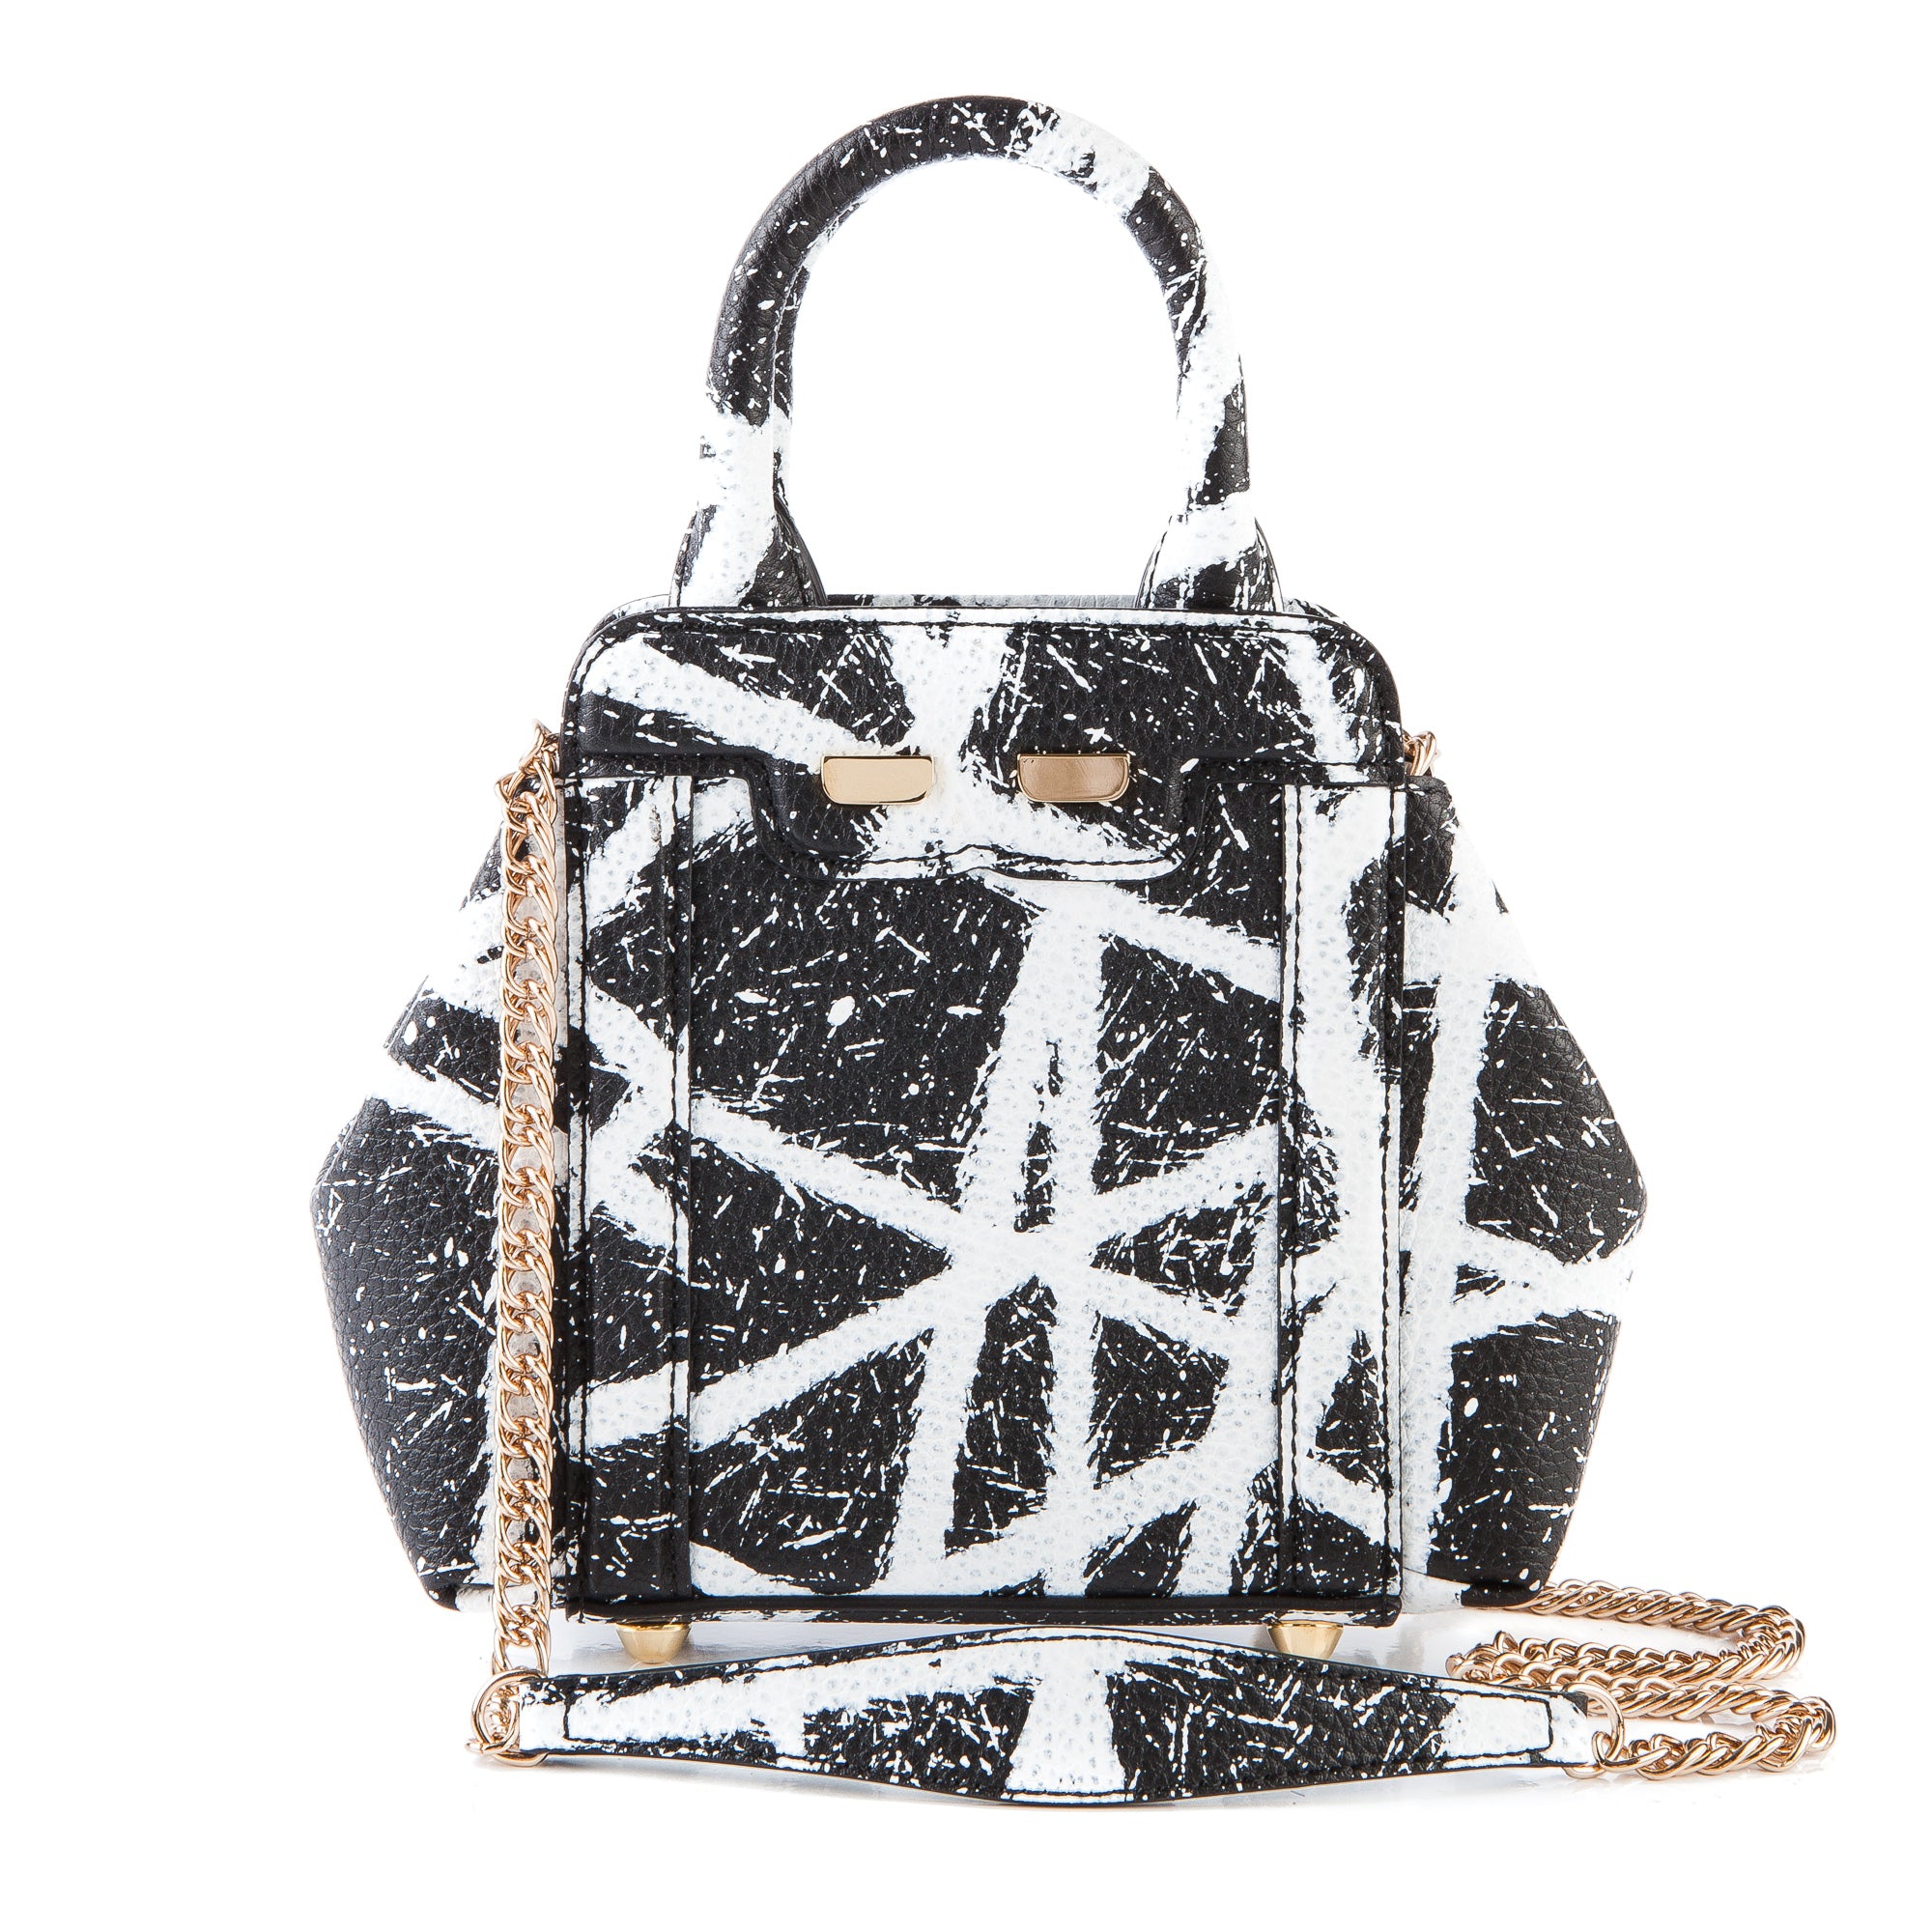 Louis Vuitton Monogram Prism Christopher GM - Metallic Backpacks